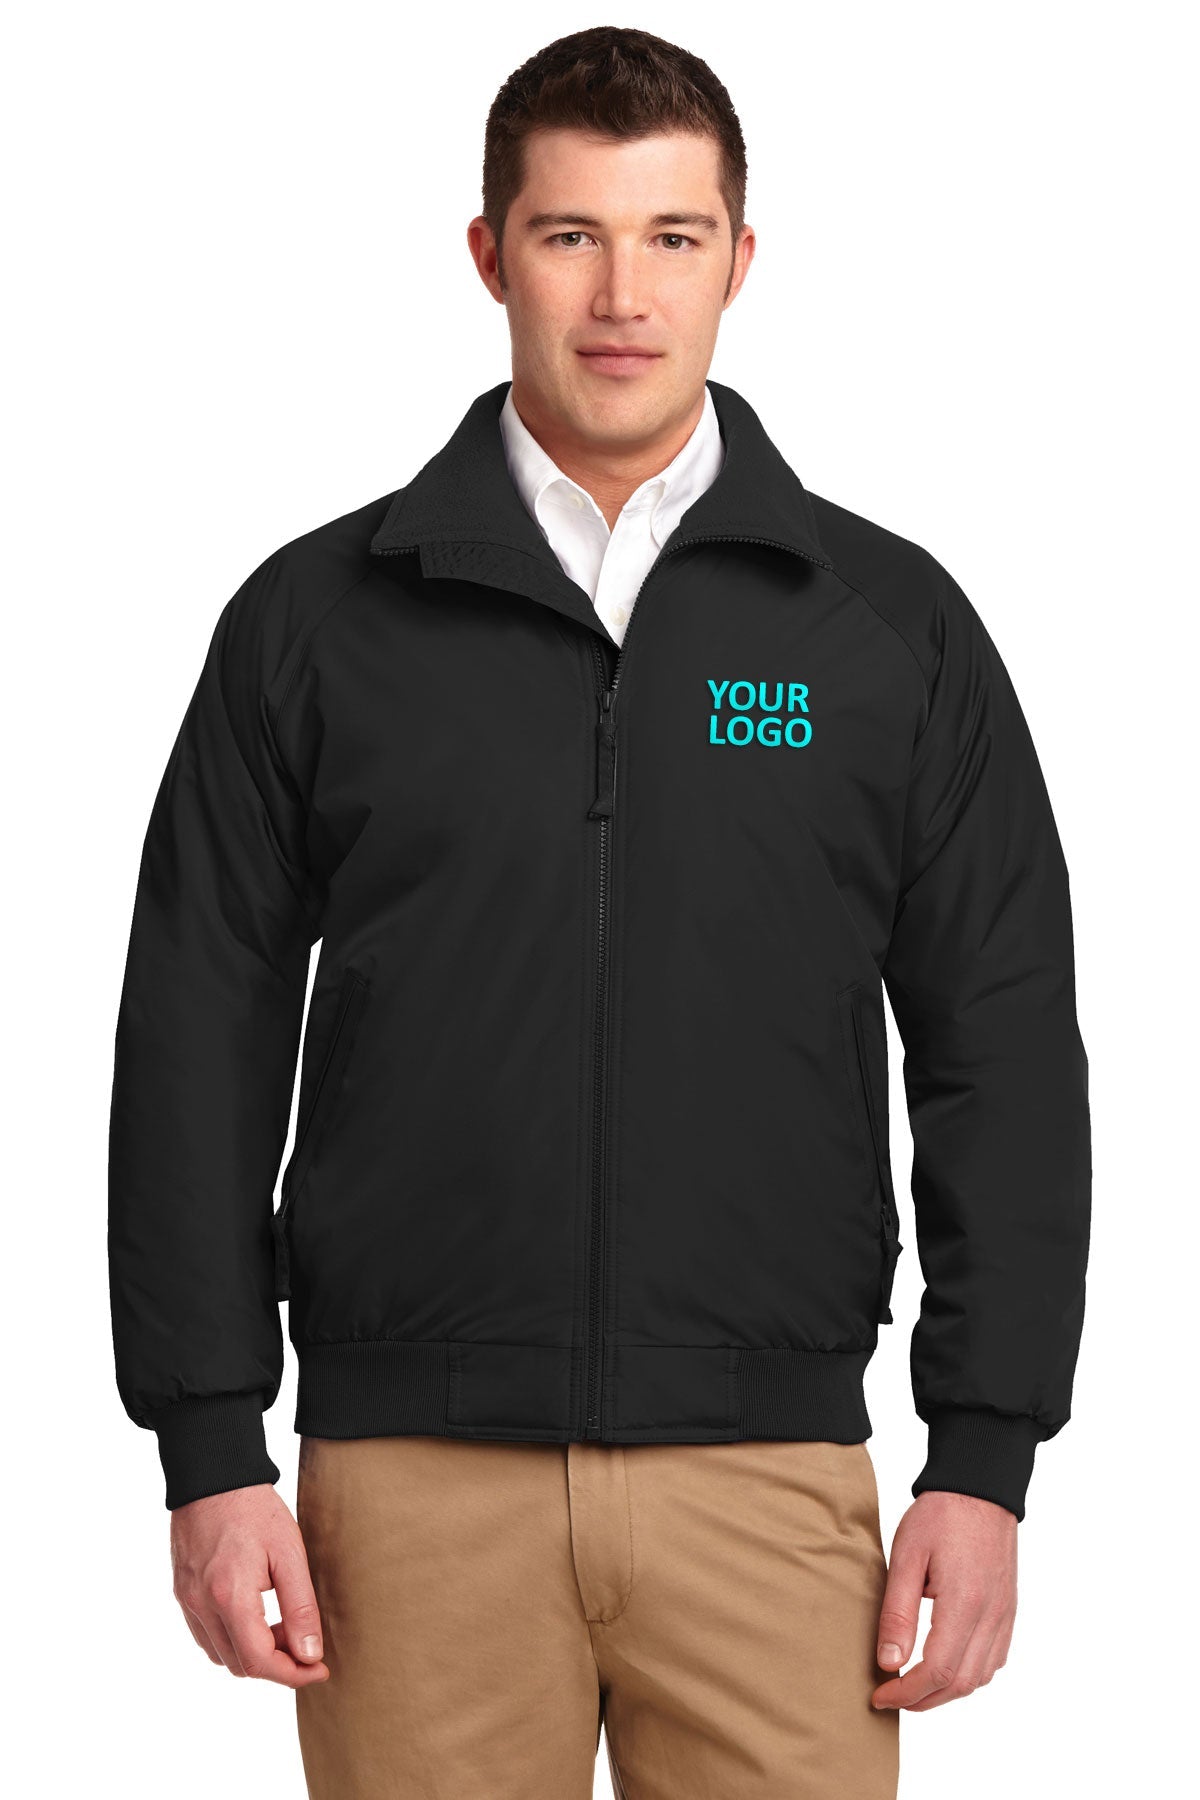 port authority true black/ true black tlj754 promotional jackets company logo